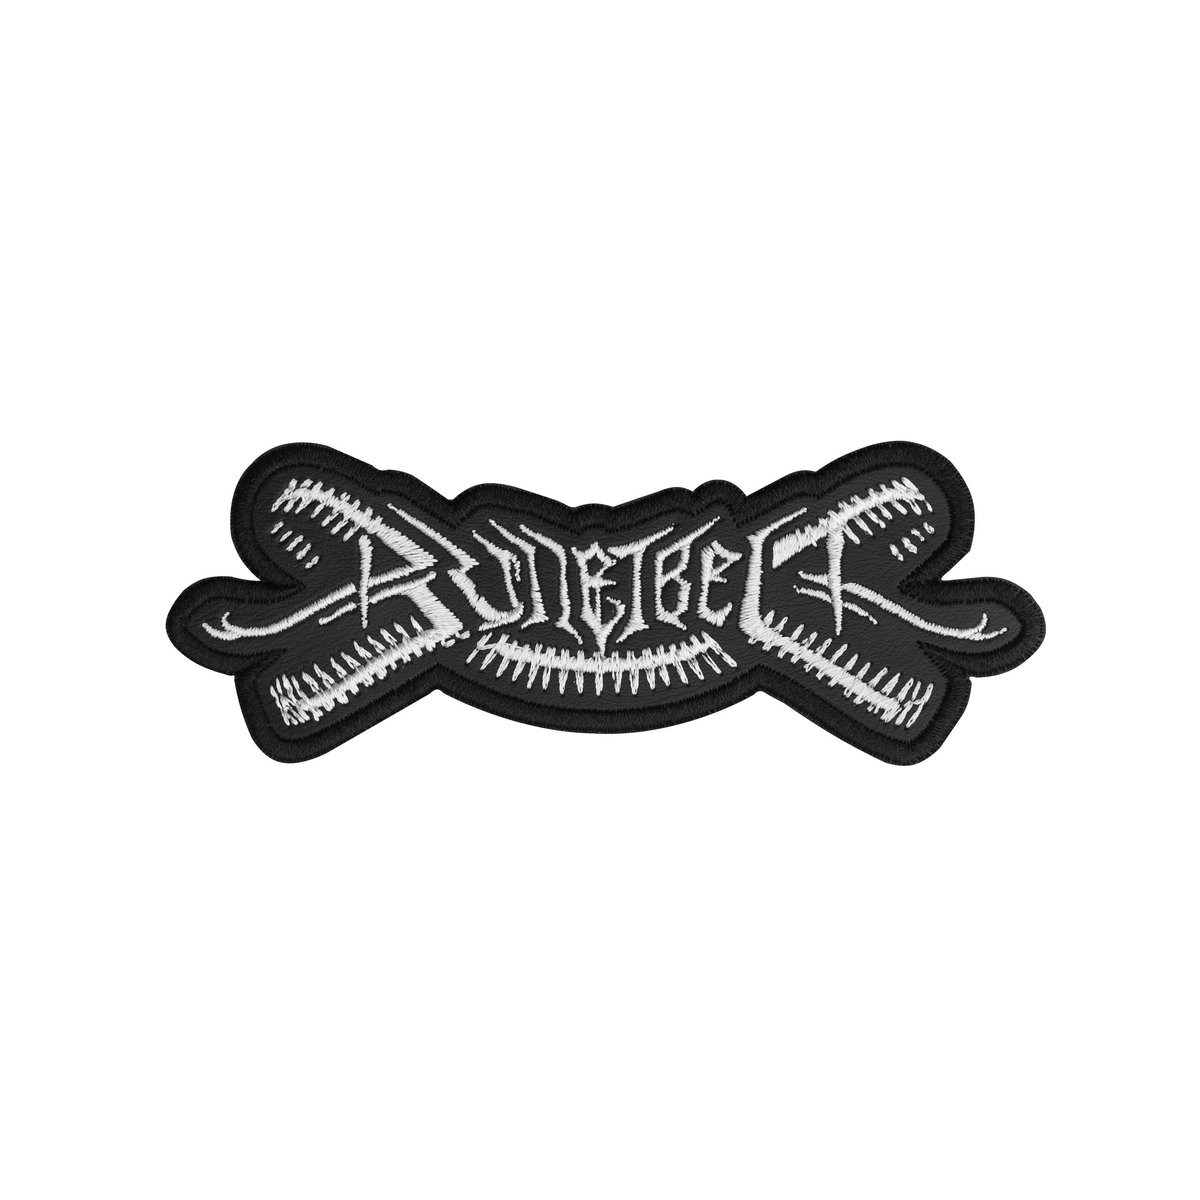 Image of Bulletbelt logo patch 13 x 4.7cm 